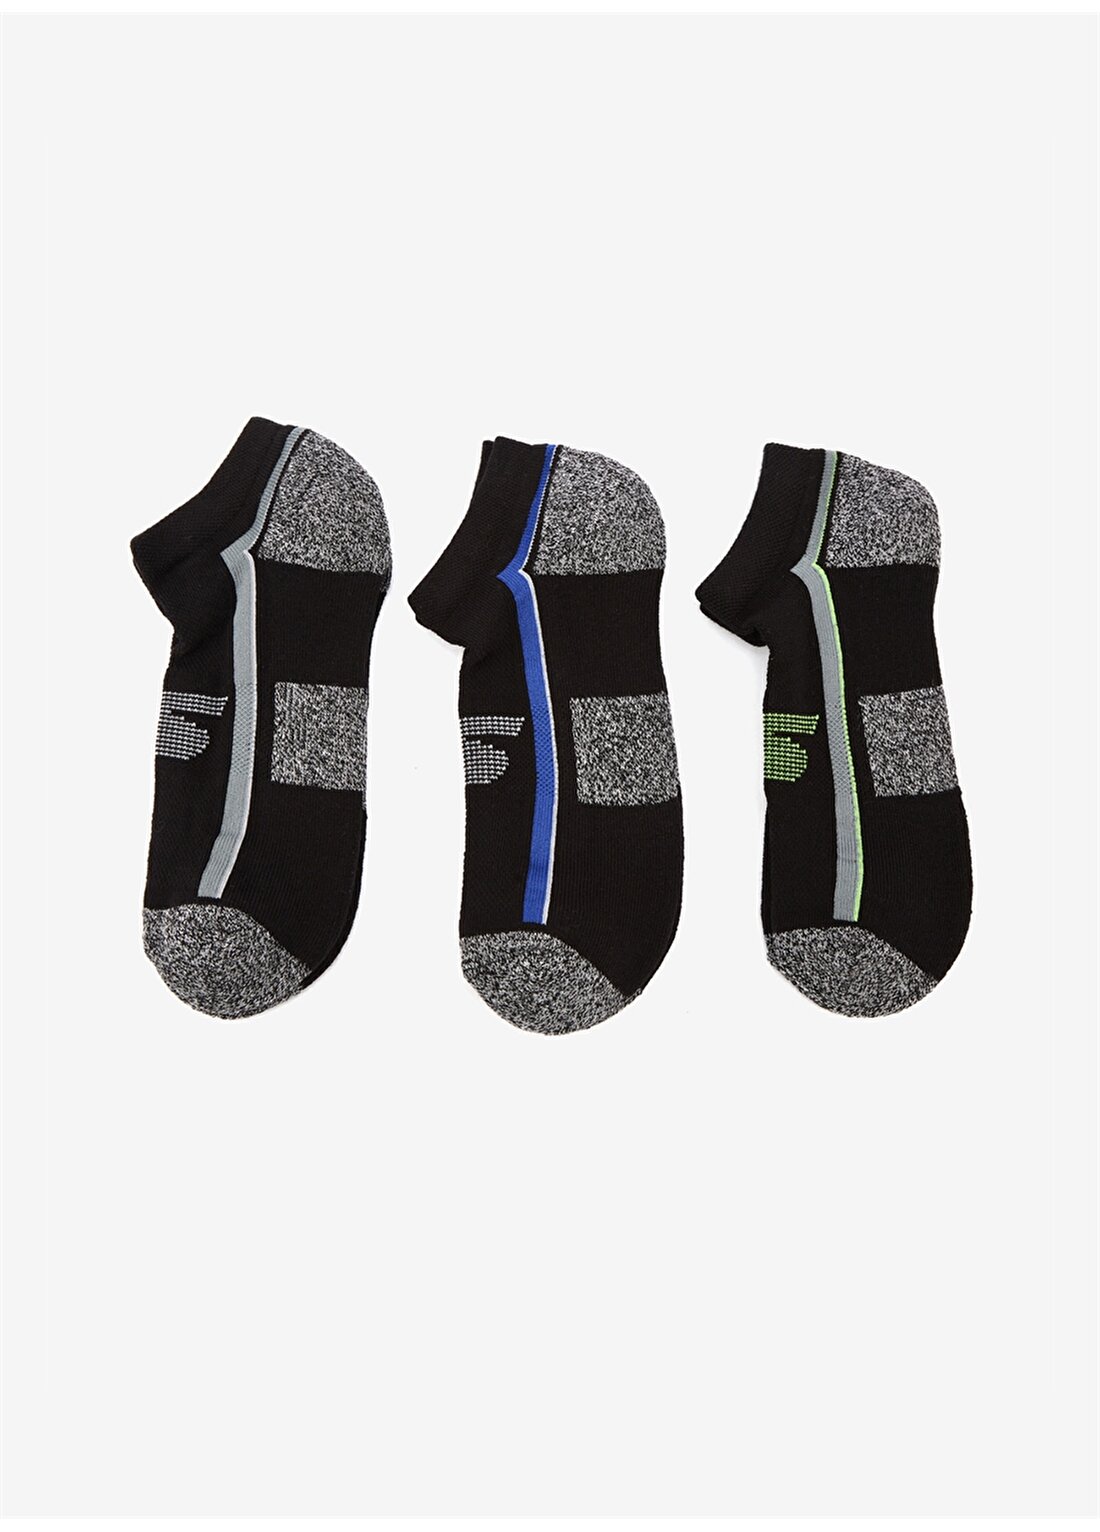 Skechers Siyah Erkek 3Lü Çorap S212331-001 3 Pack Low Cut Socks